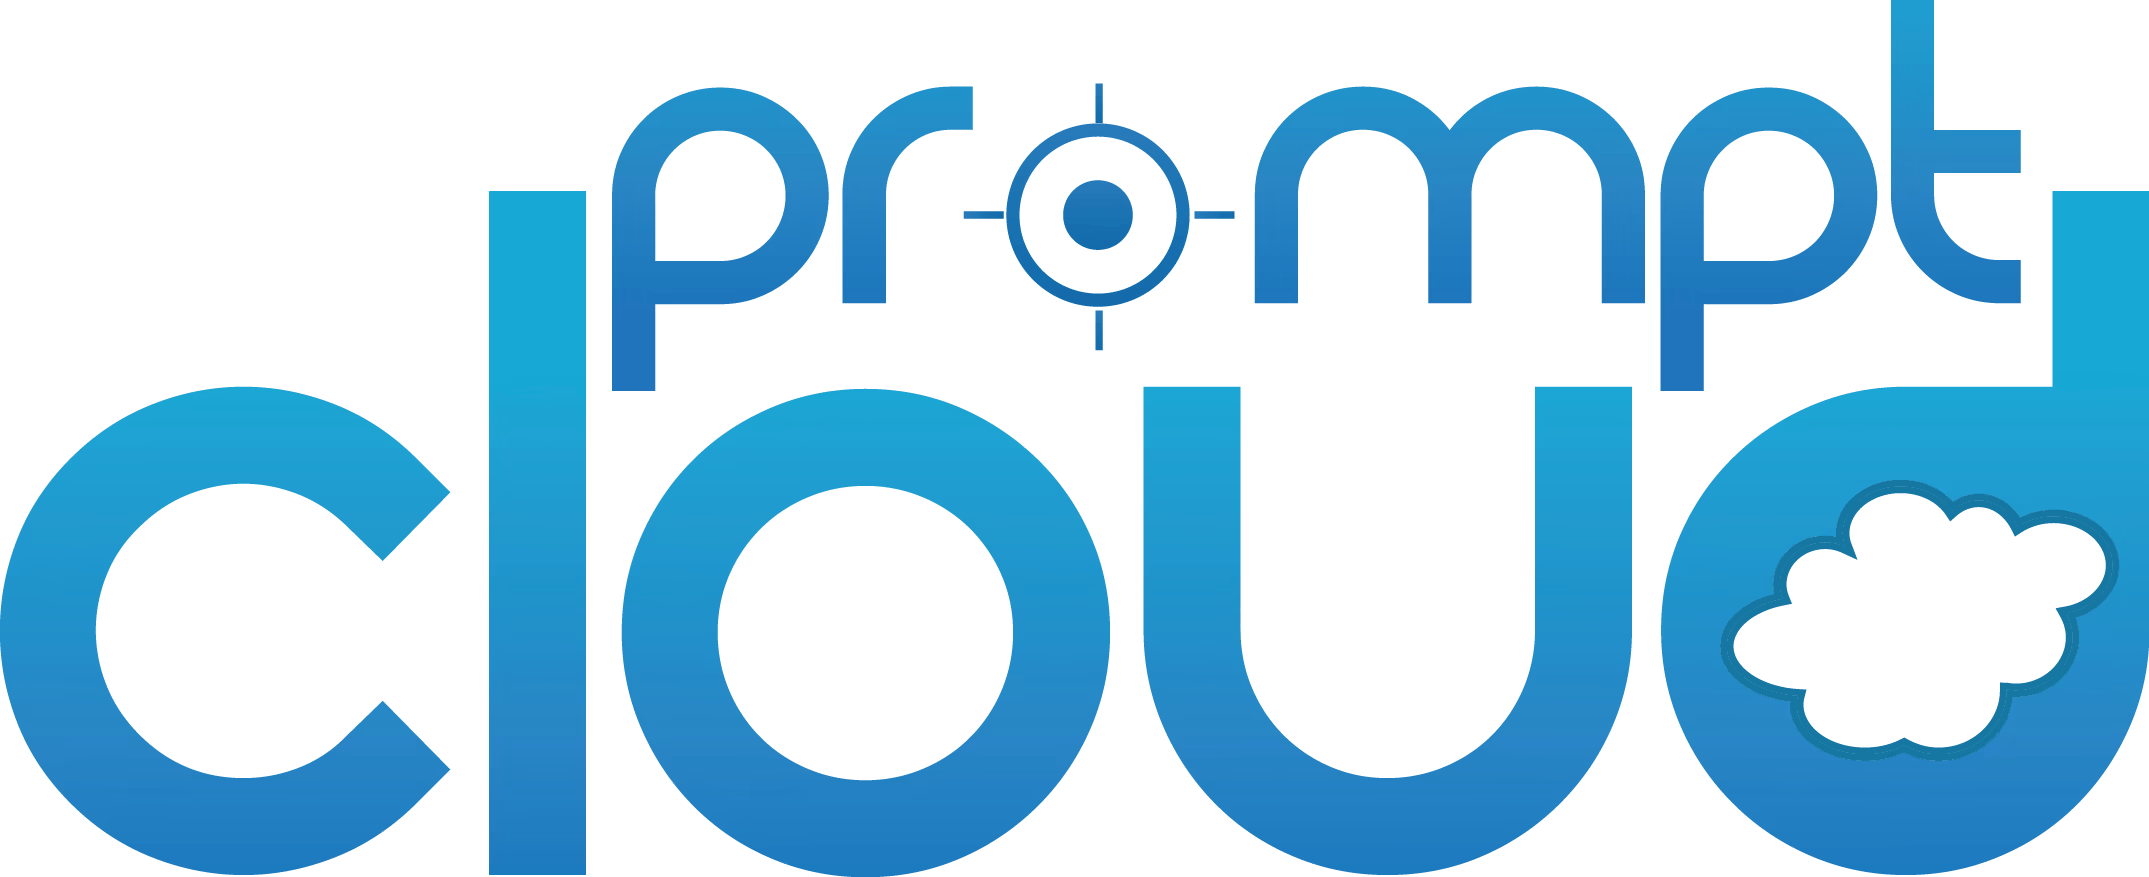 promptcloud logo